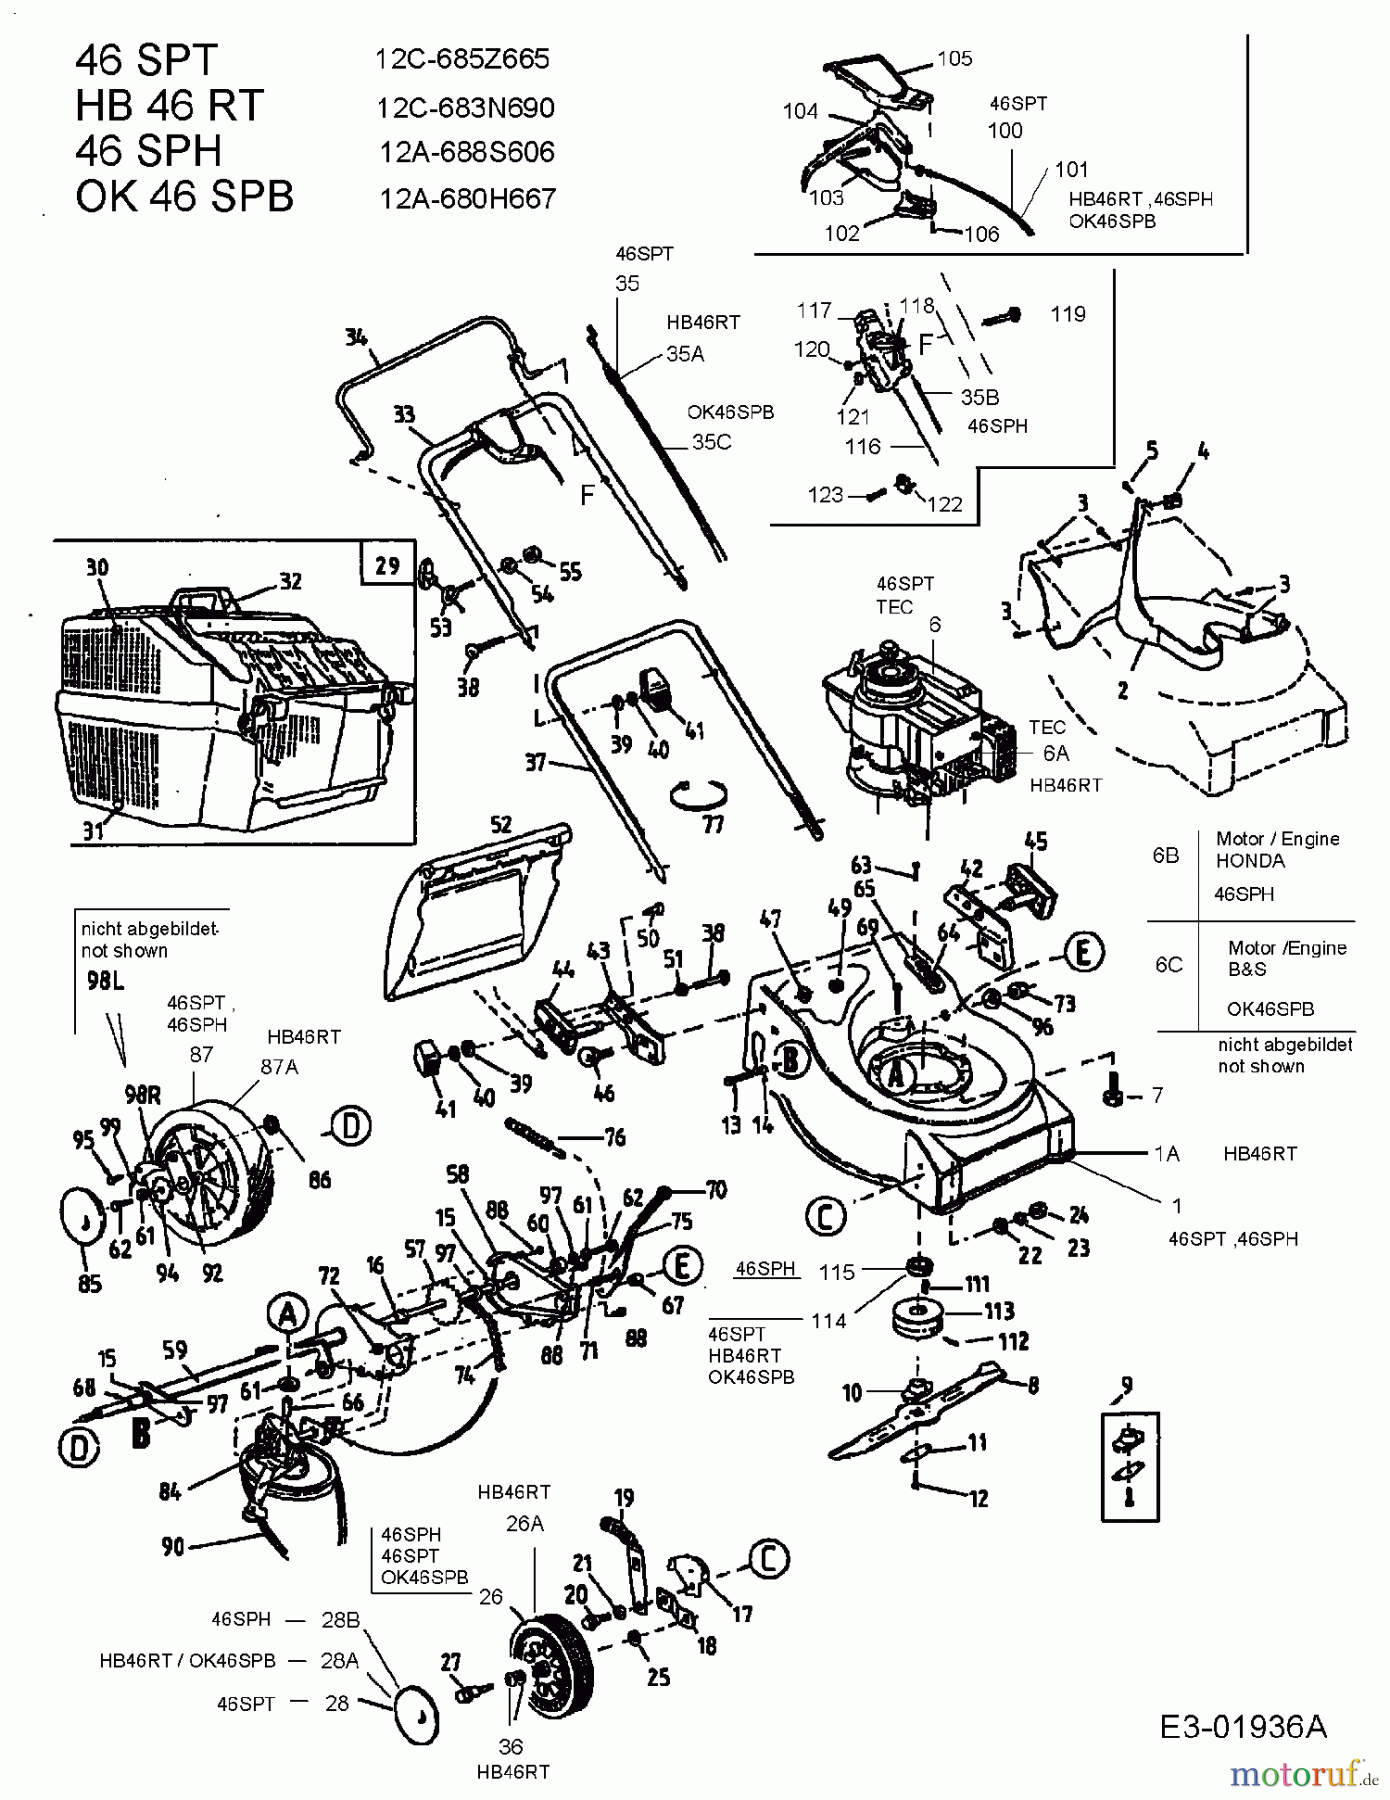  Ok Motormäher mit Antrieb 46 SPB 12A-680H667  (2004) Grundgerät